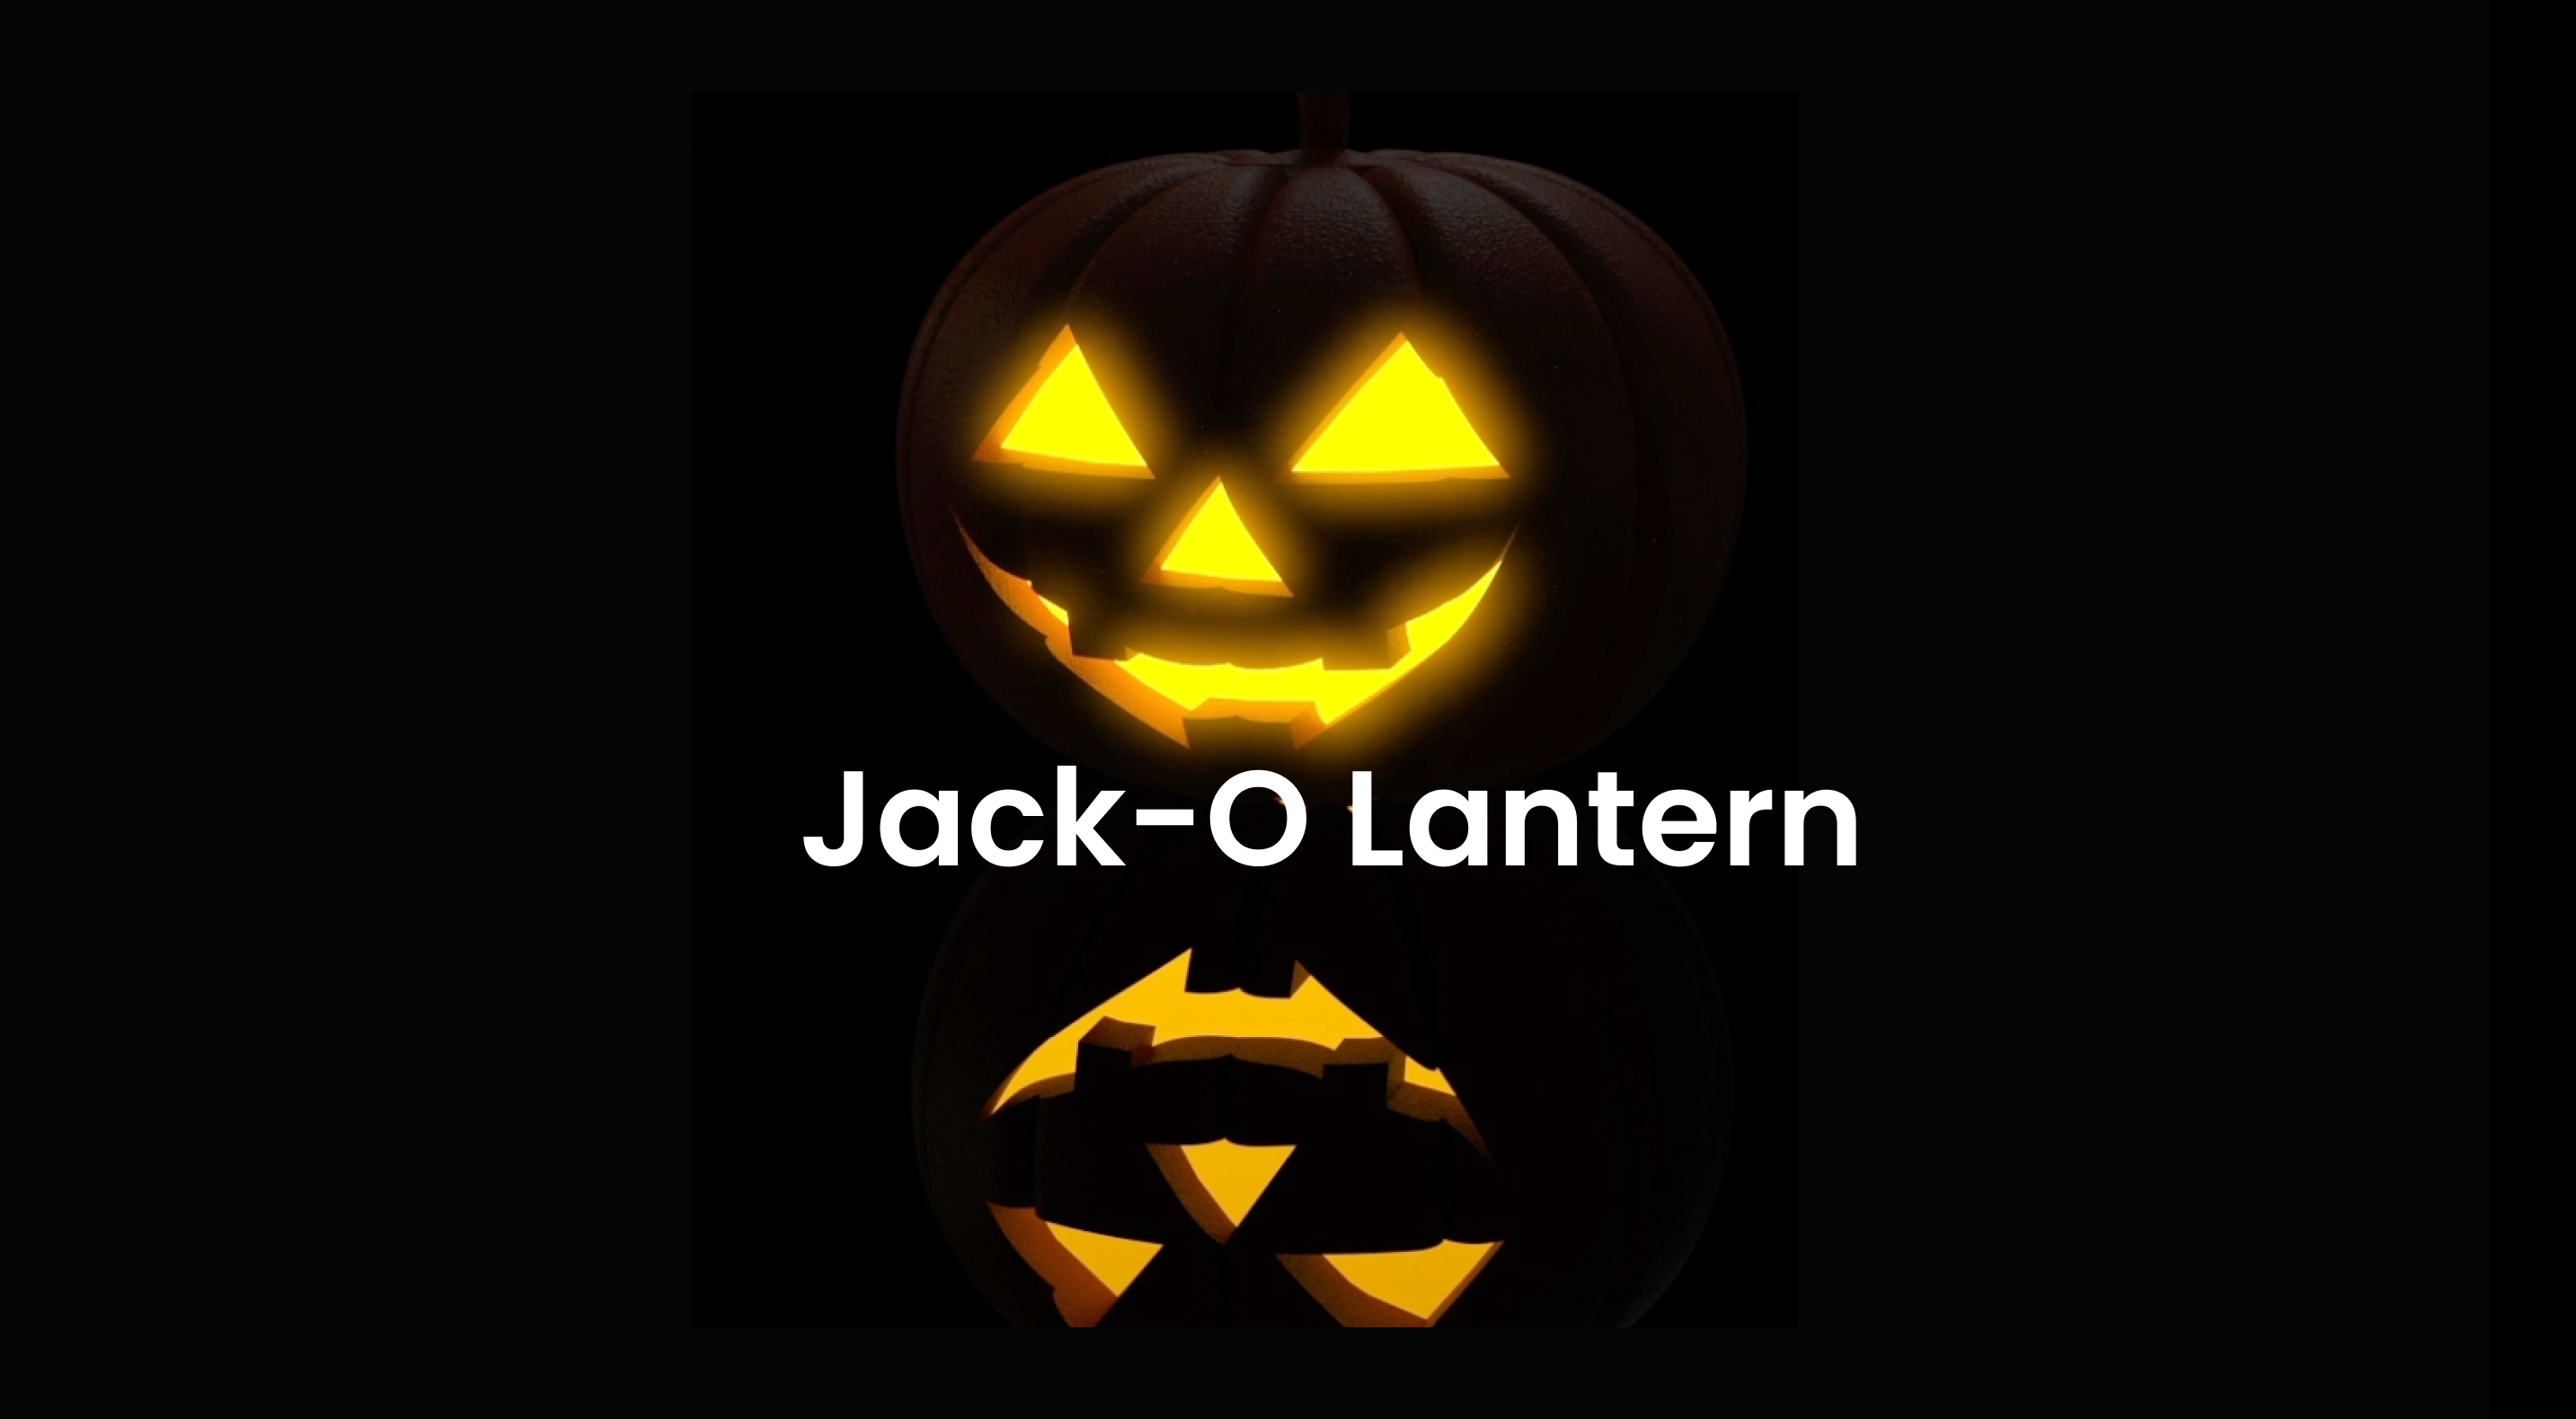 Jack-O Lantern Halloween Digital Decorations for Haunted House